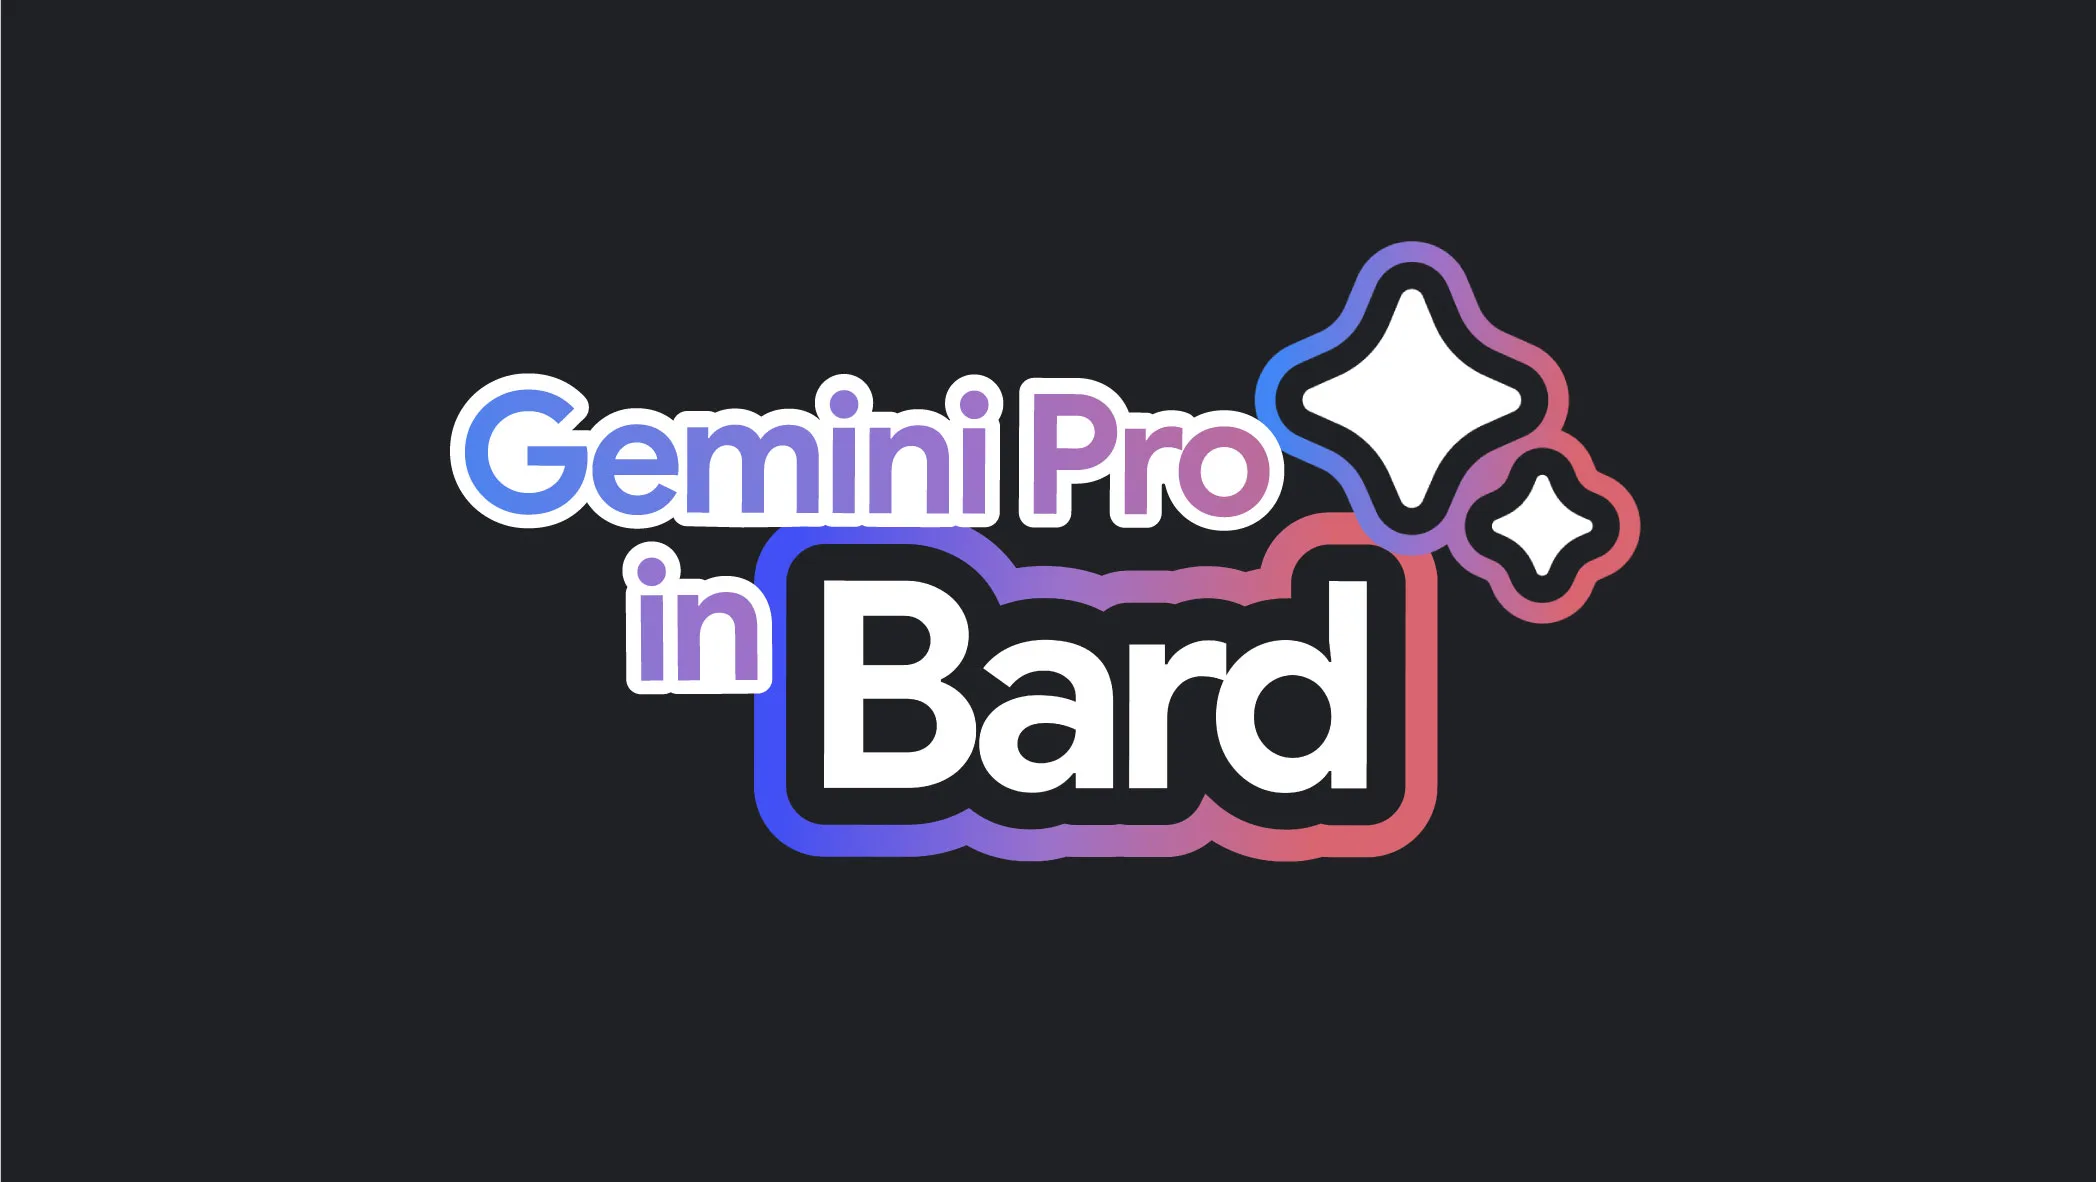 Gemini Pro in Bard jpg